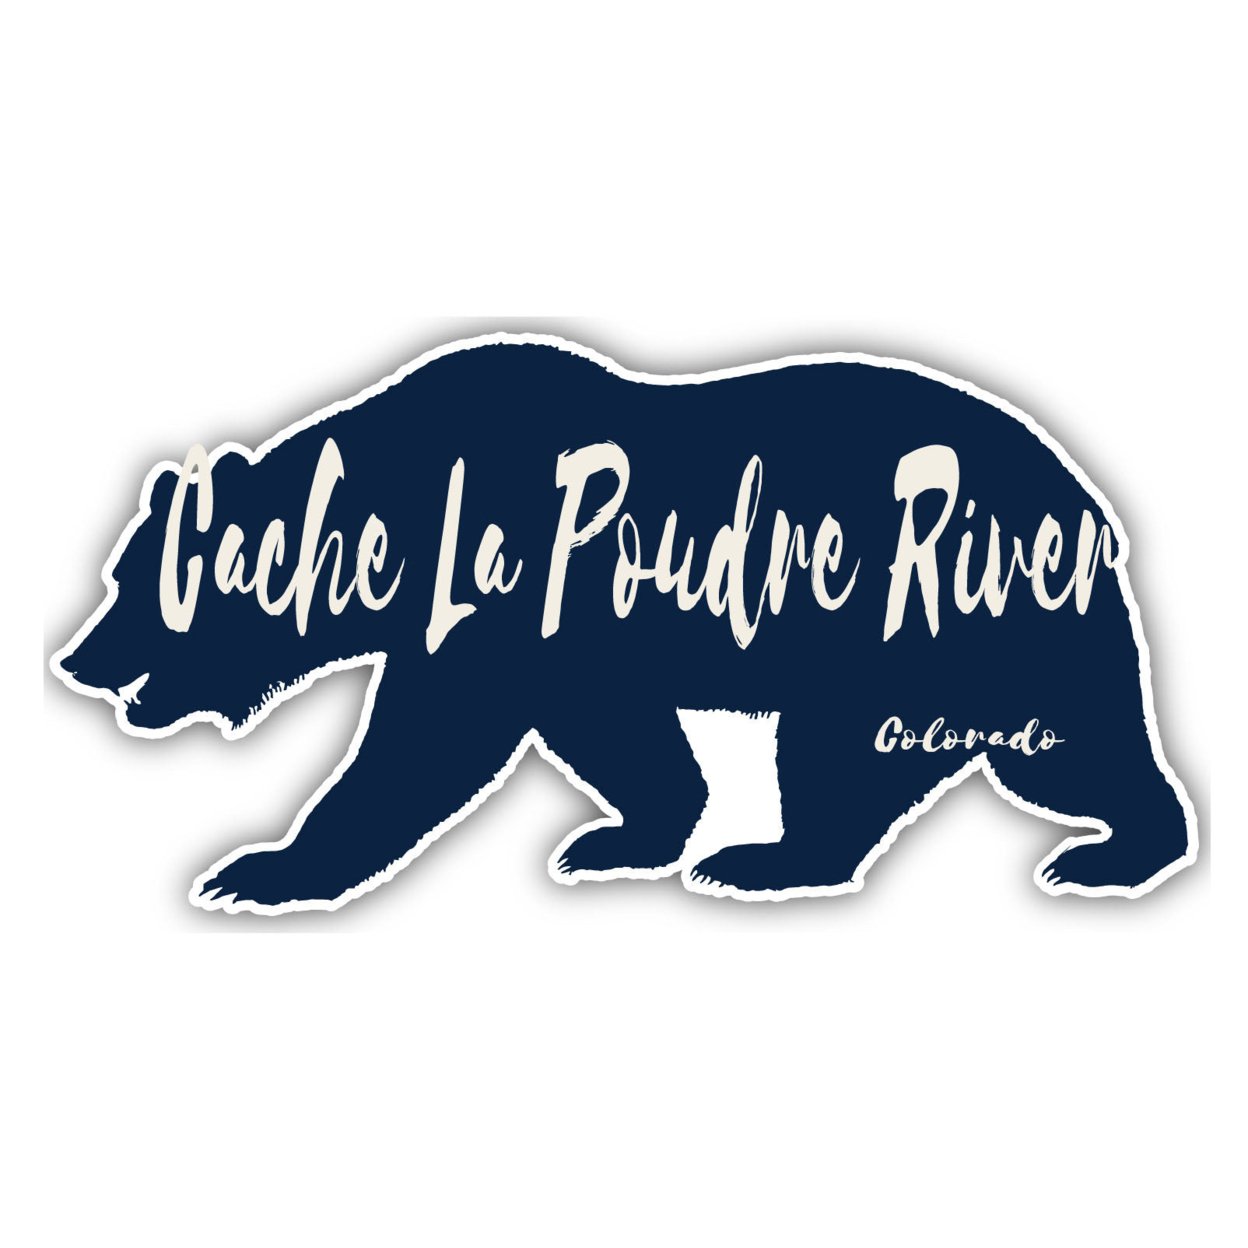 Cache La Poudre River Colorado Souvenir Decorative Stickers (Choose Theme And Size) - Single Unit, 12-Inch, Camp Life